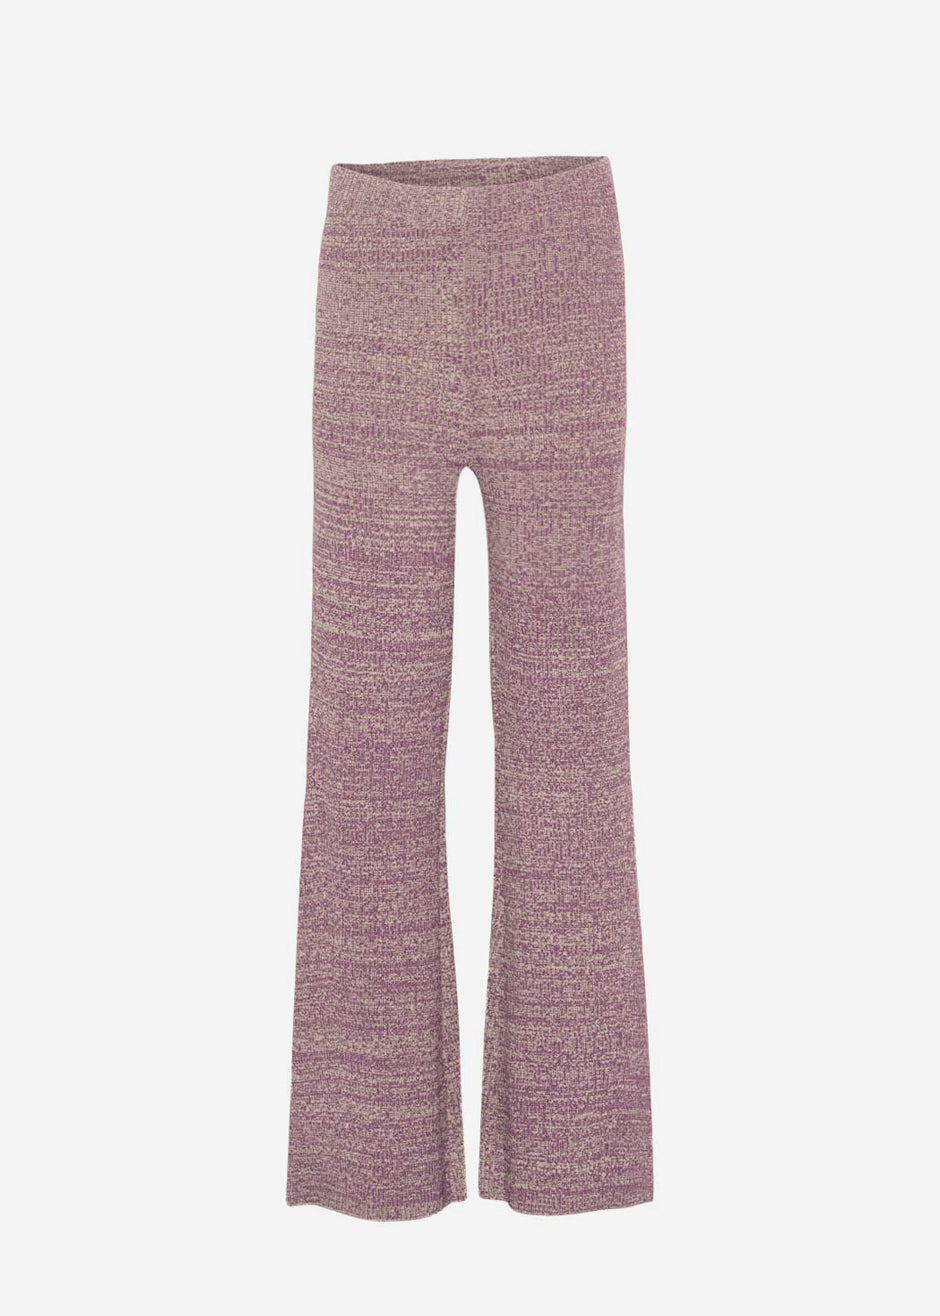 REMAIN Pants Melange Knit Grape Print - Grape Kiss Comb - 10